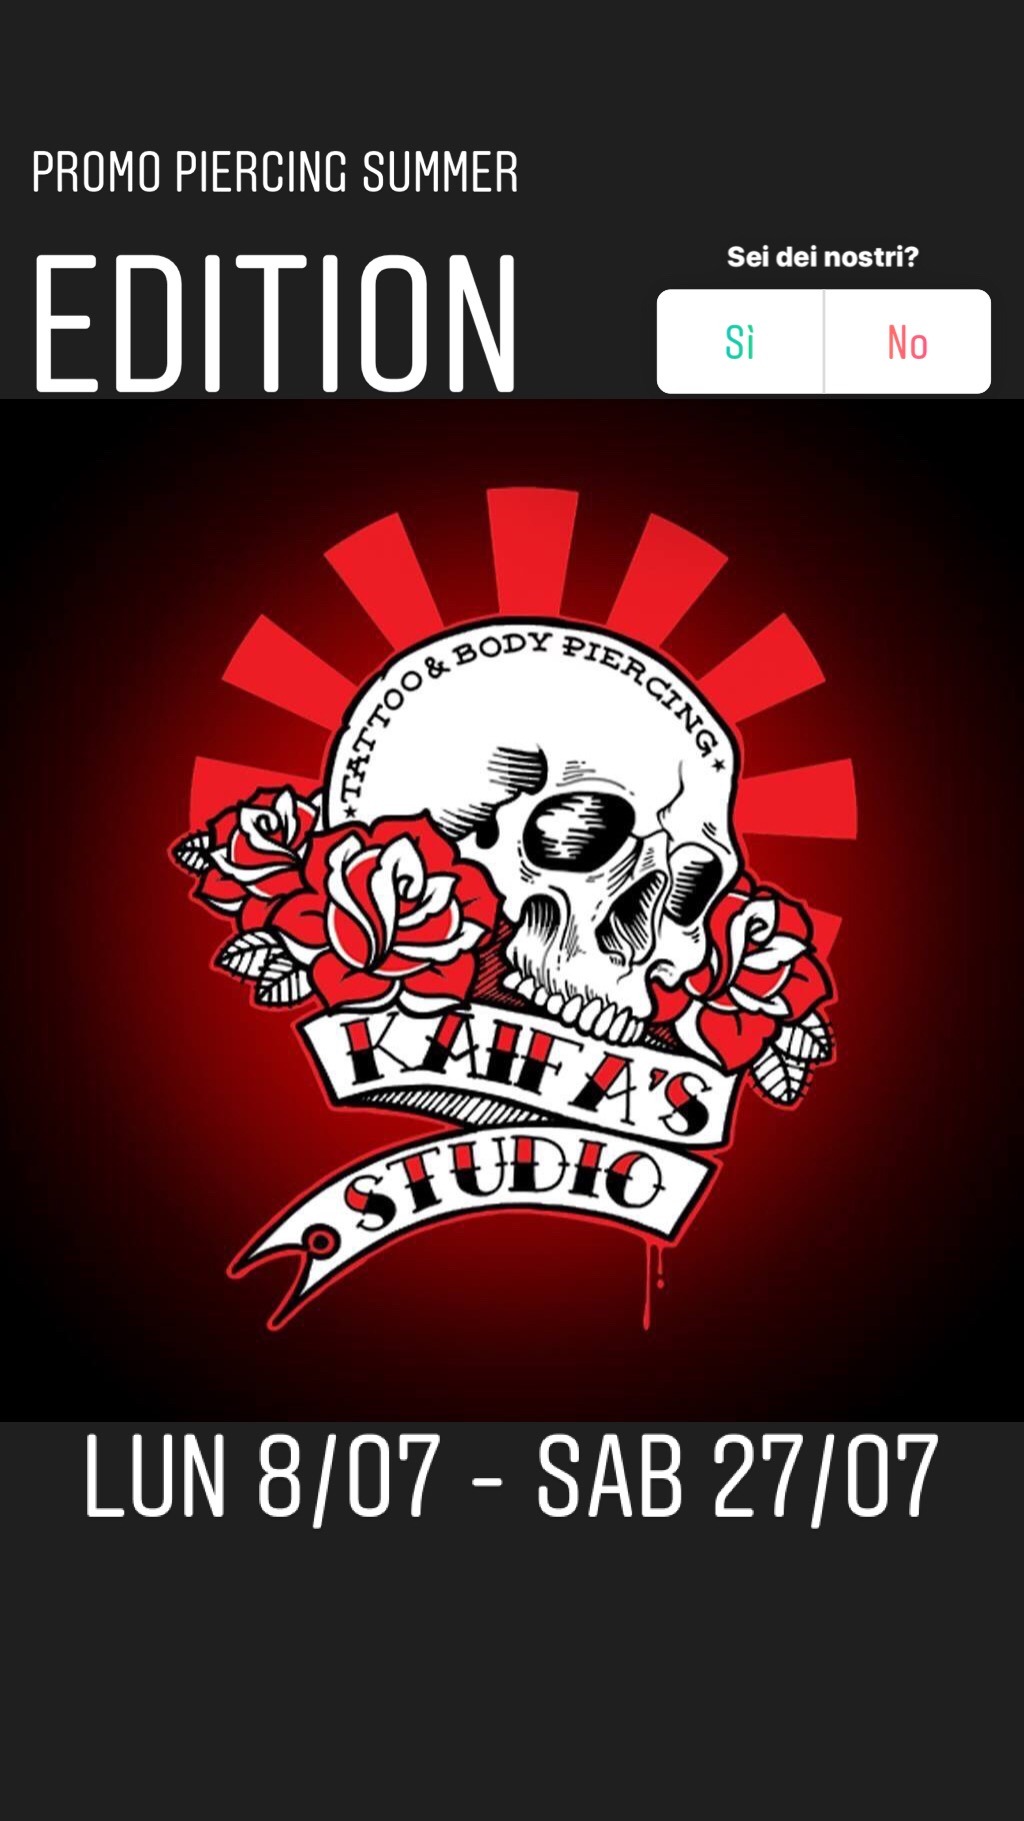 Kaifa’s Studio Guest